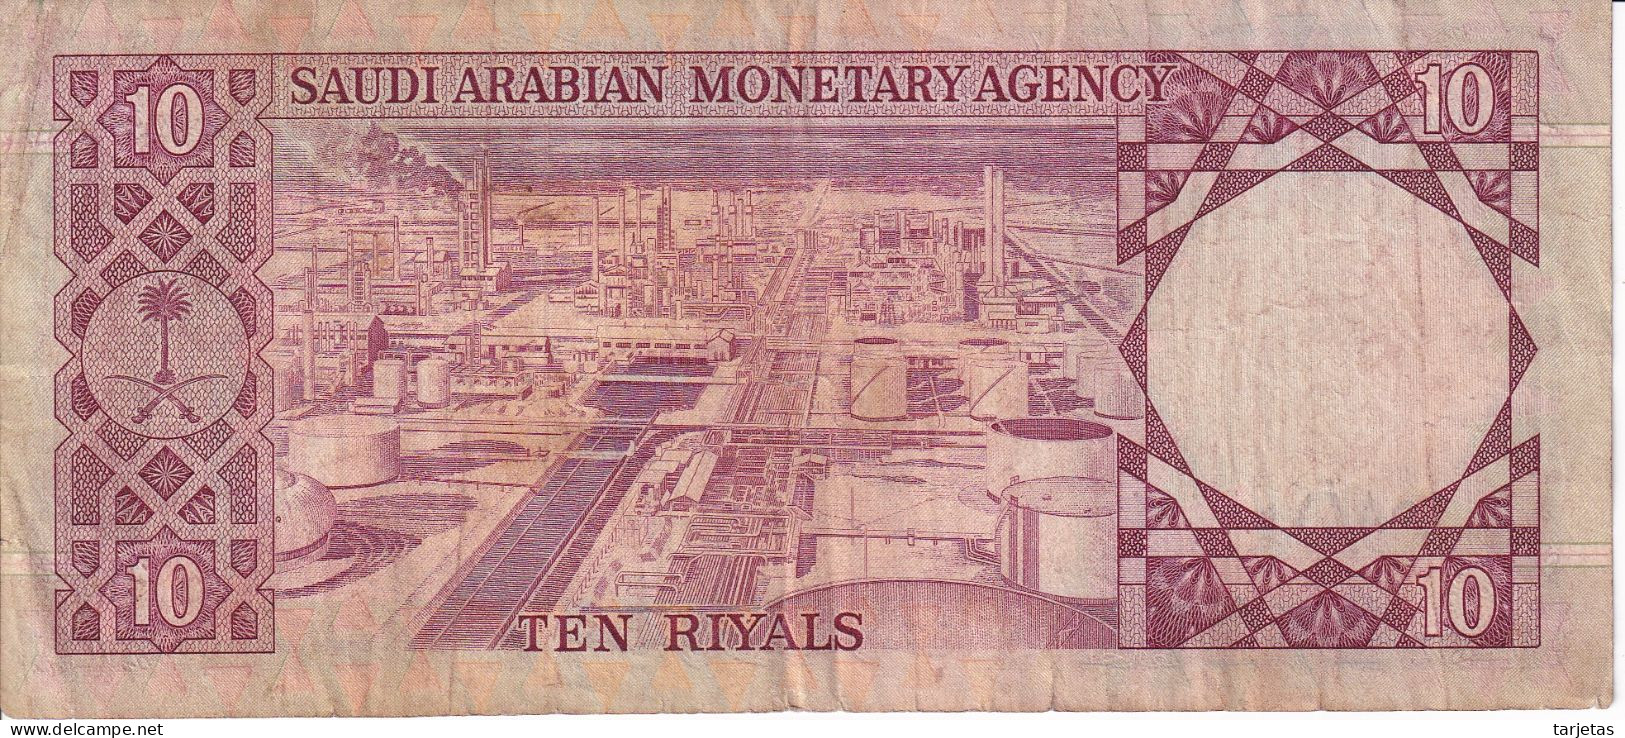 BILLETE DE ARABIA SAUDITA DE 10 RIYAL DEL AÑO 1977   (BANKNOTE) - Saudi Arabia